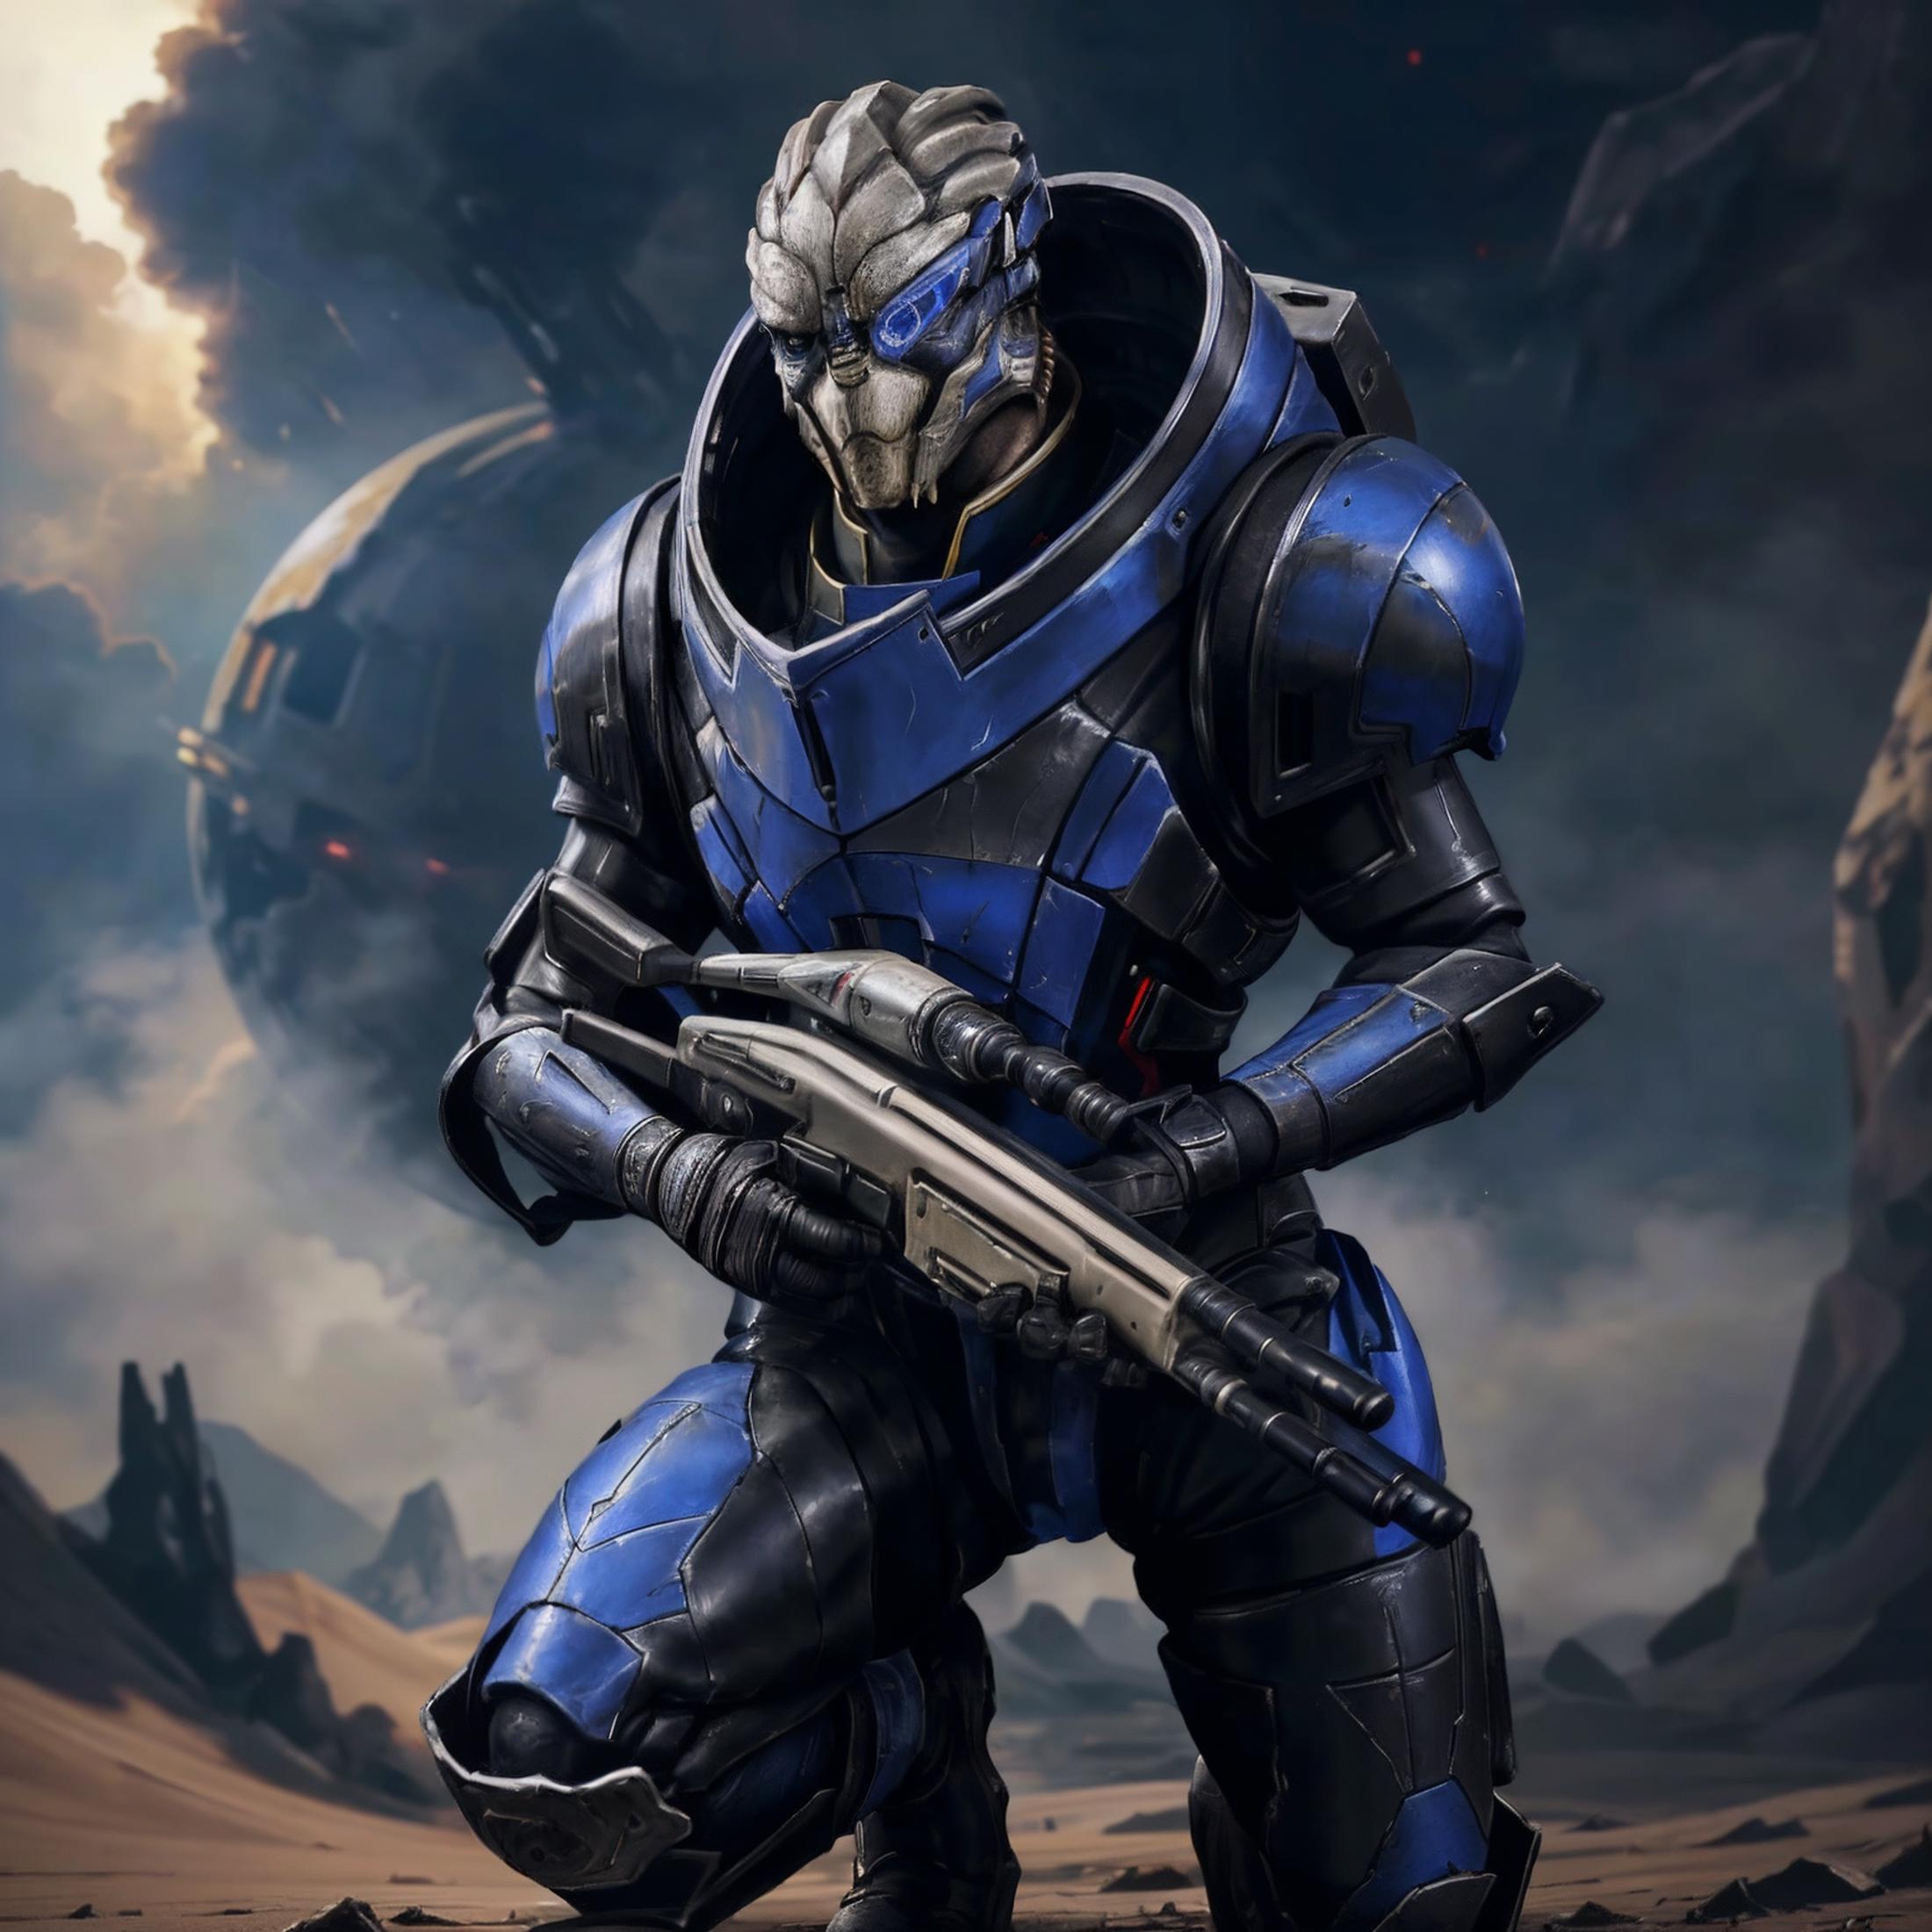 Garrus Vakarian (Mass Effect) LoRA image by Taloji